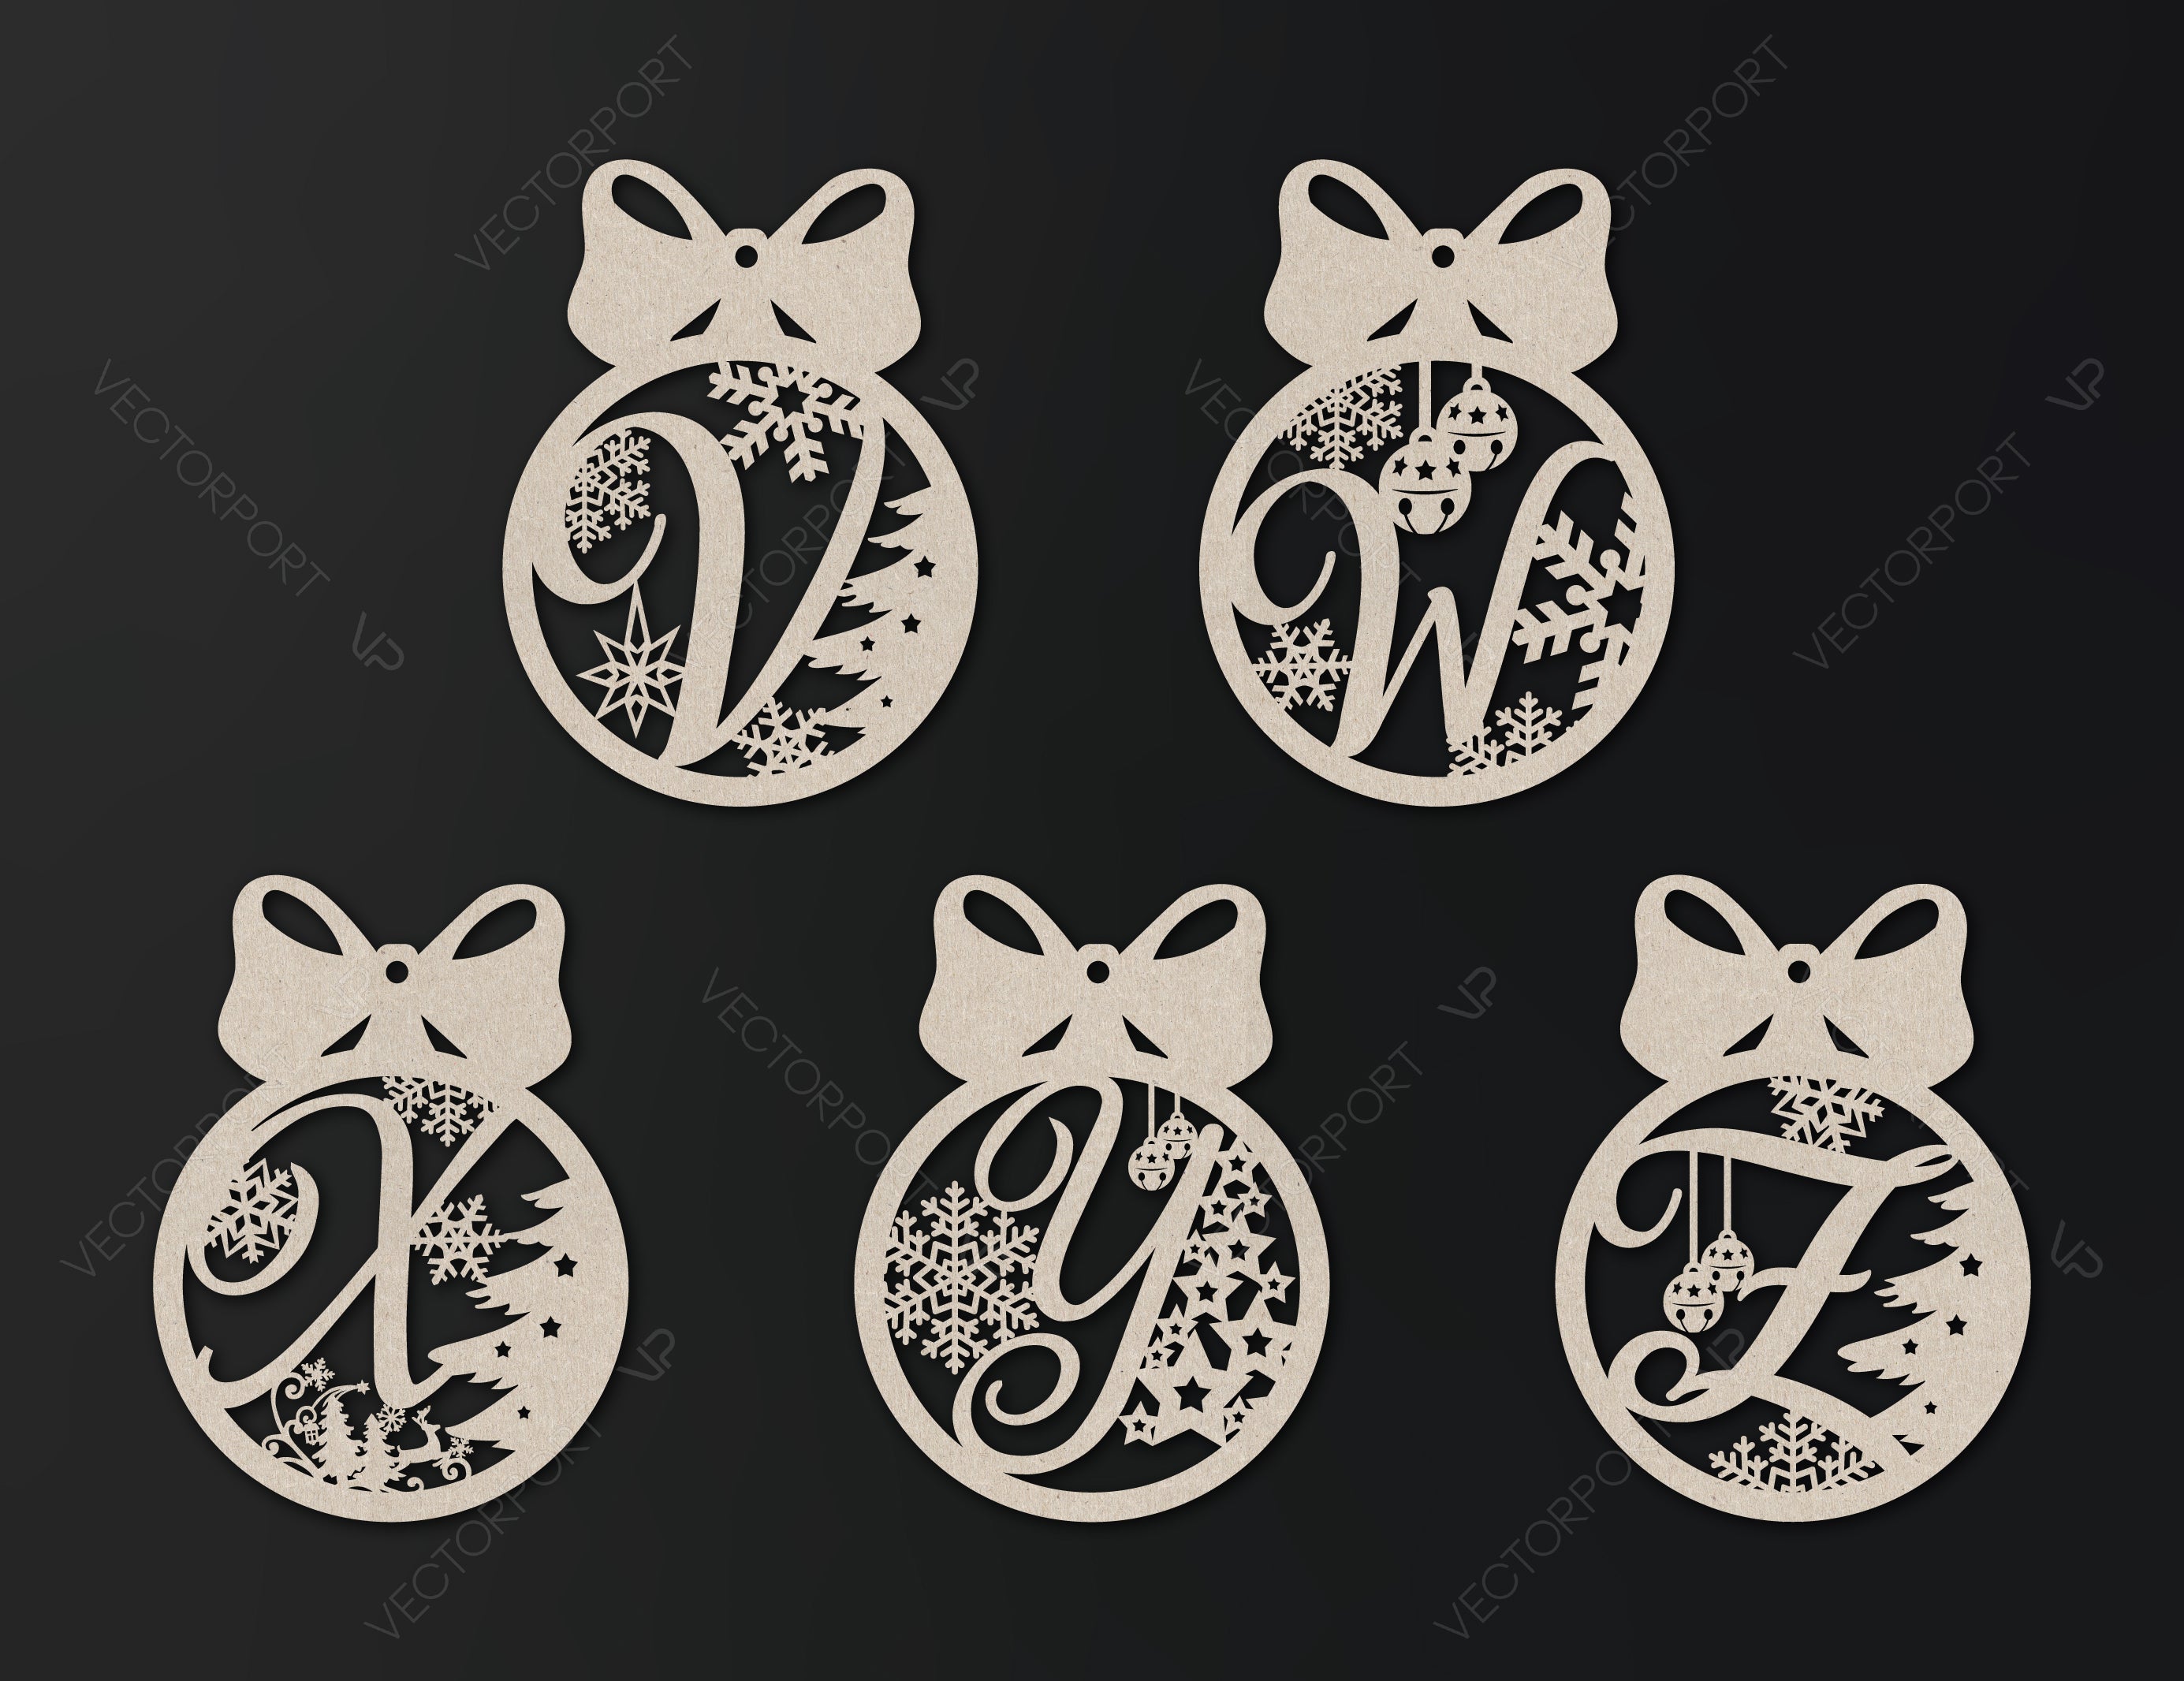 Christmas Tree Decorations Alphabet letters | SVG, DXF, AI |#008|